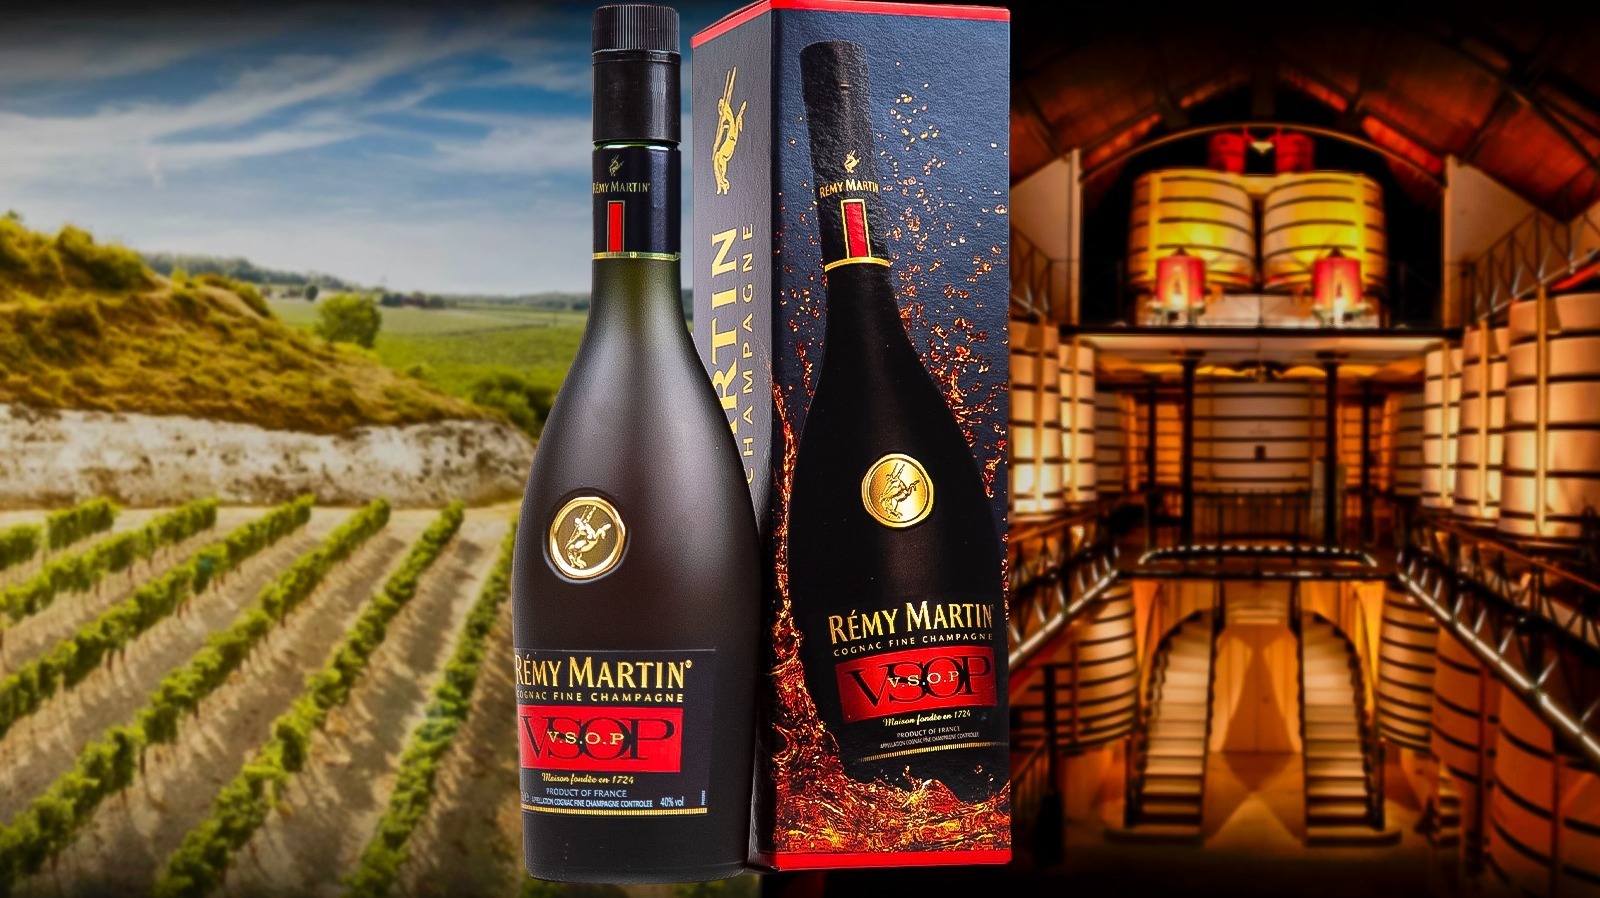 Rémy Martin VSOP: The Ultimate Bottle Guide